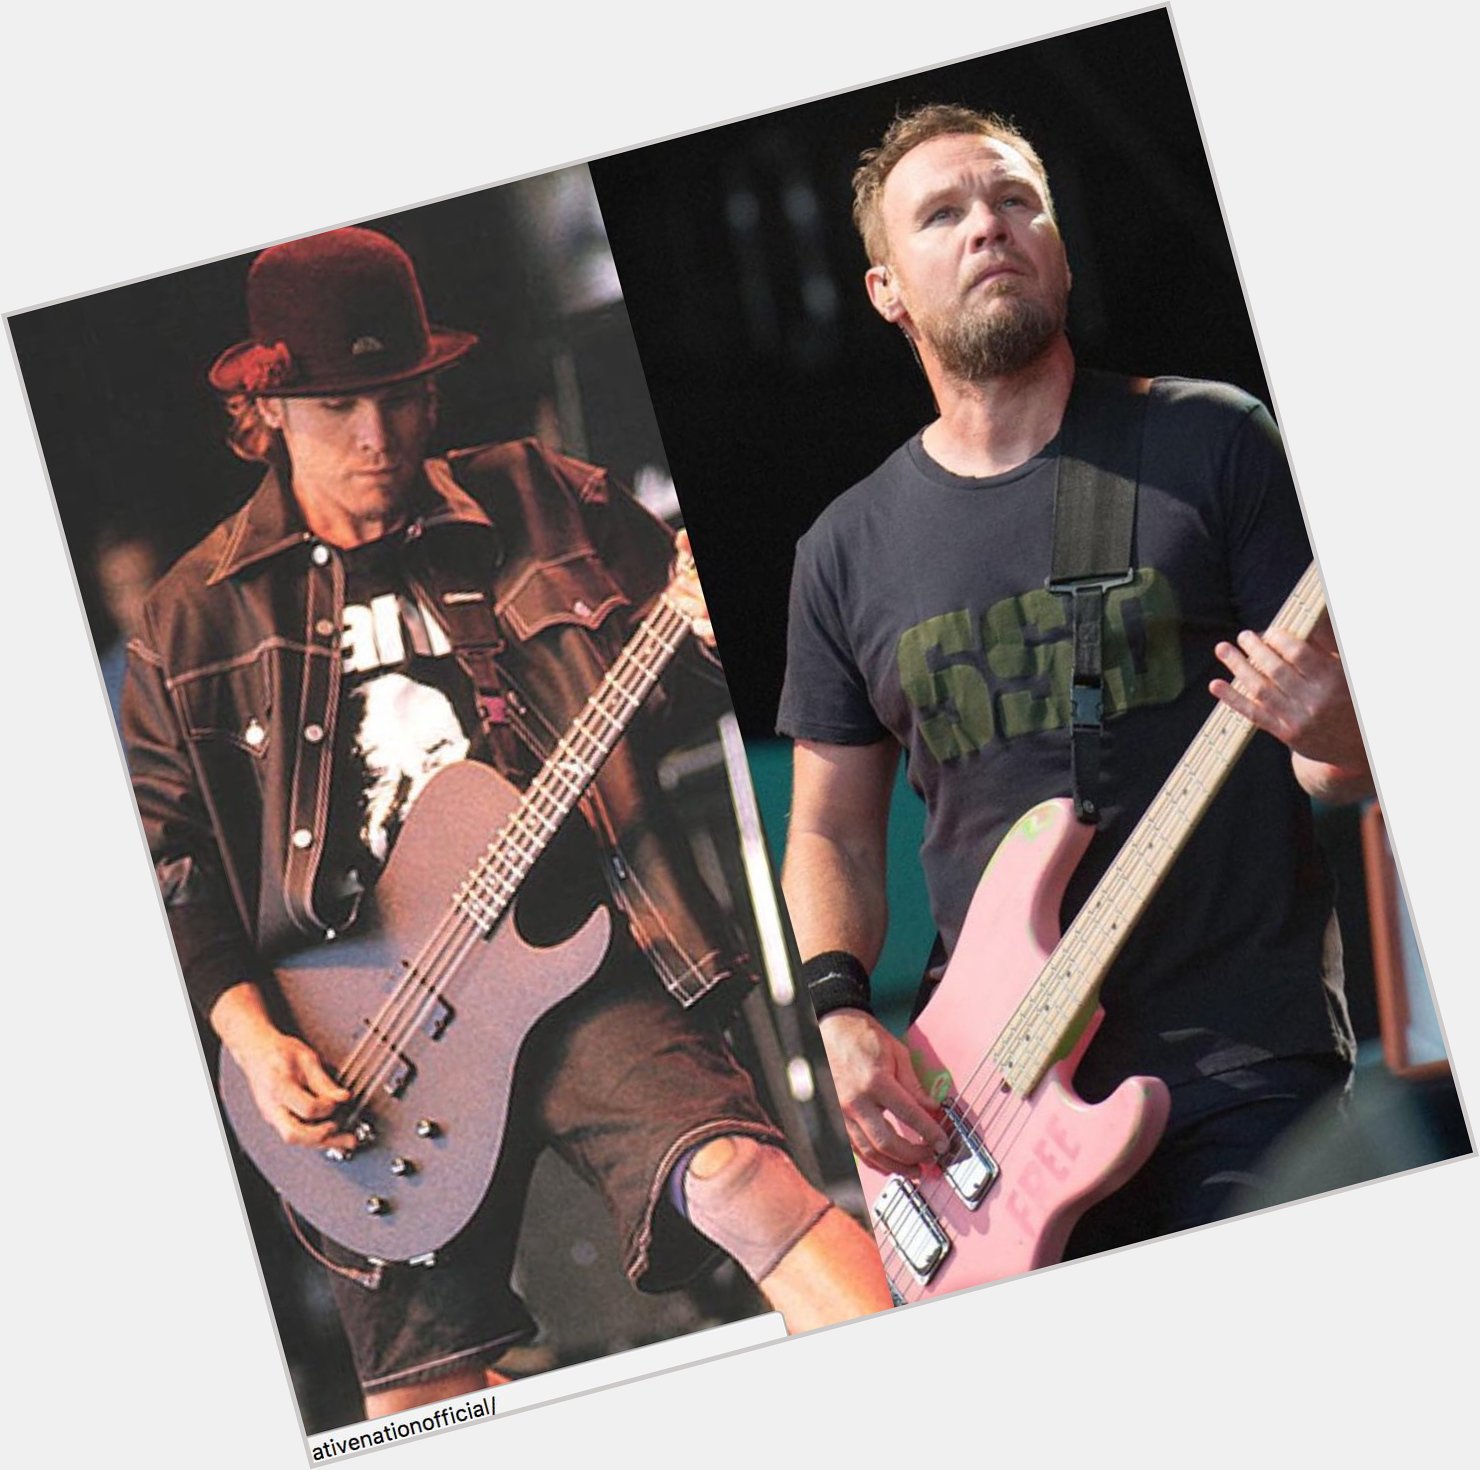 Happy 55th birthday to Pearl Jam bassist Jeff Ament! 